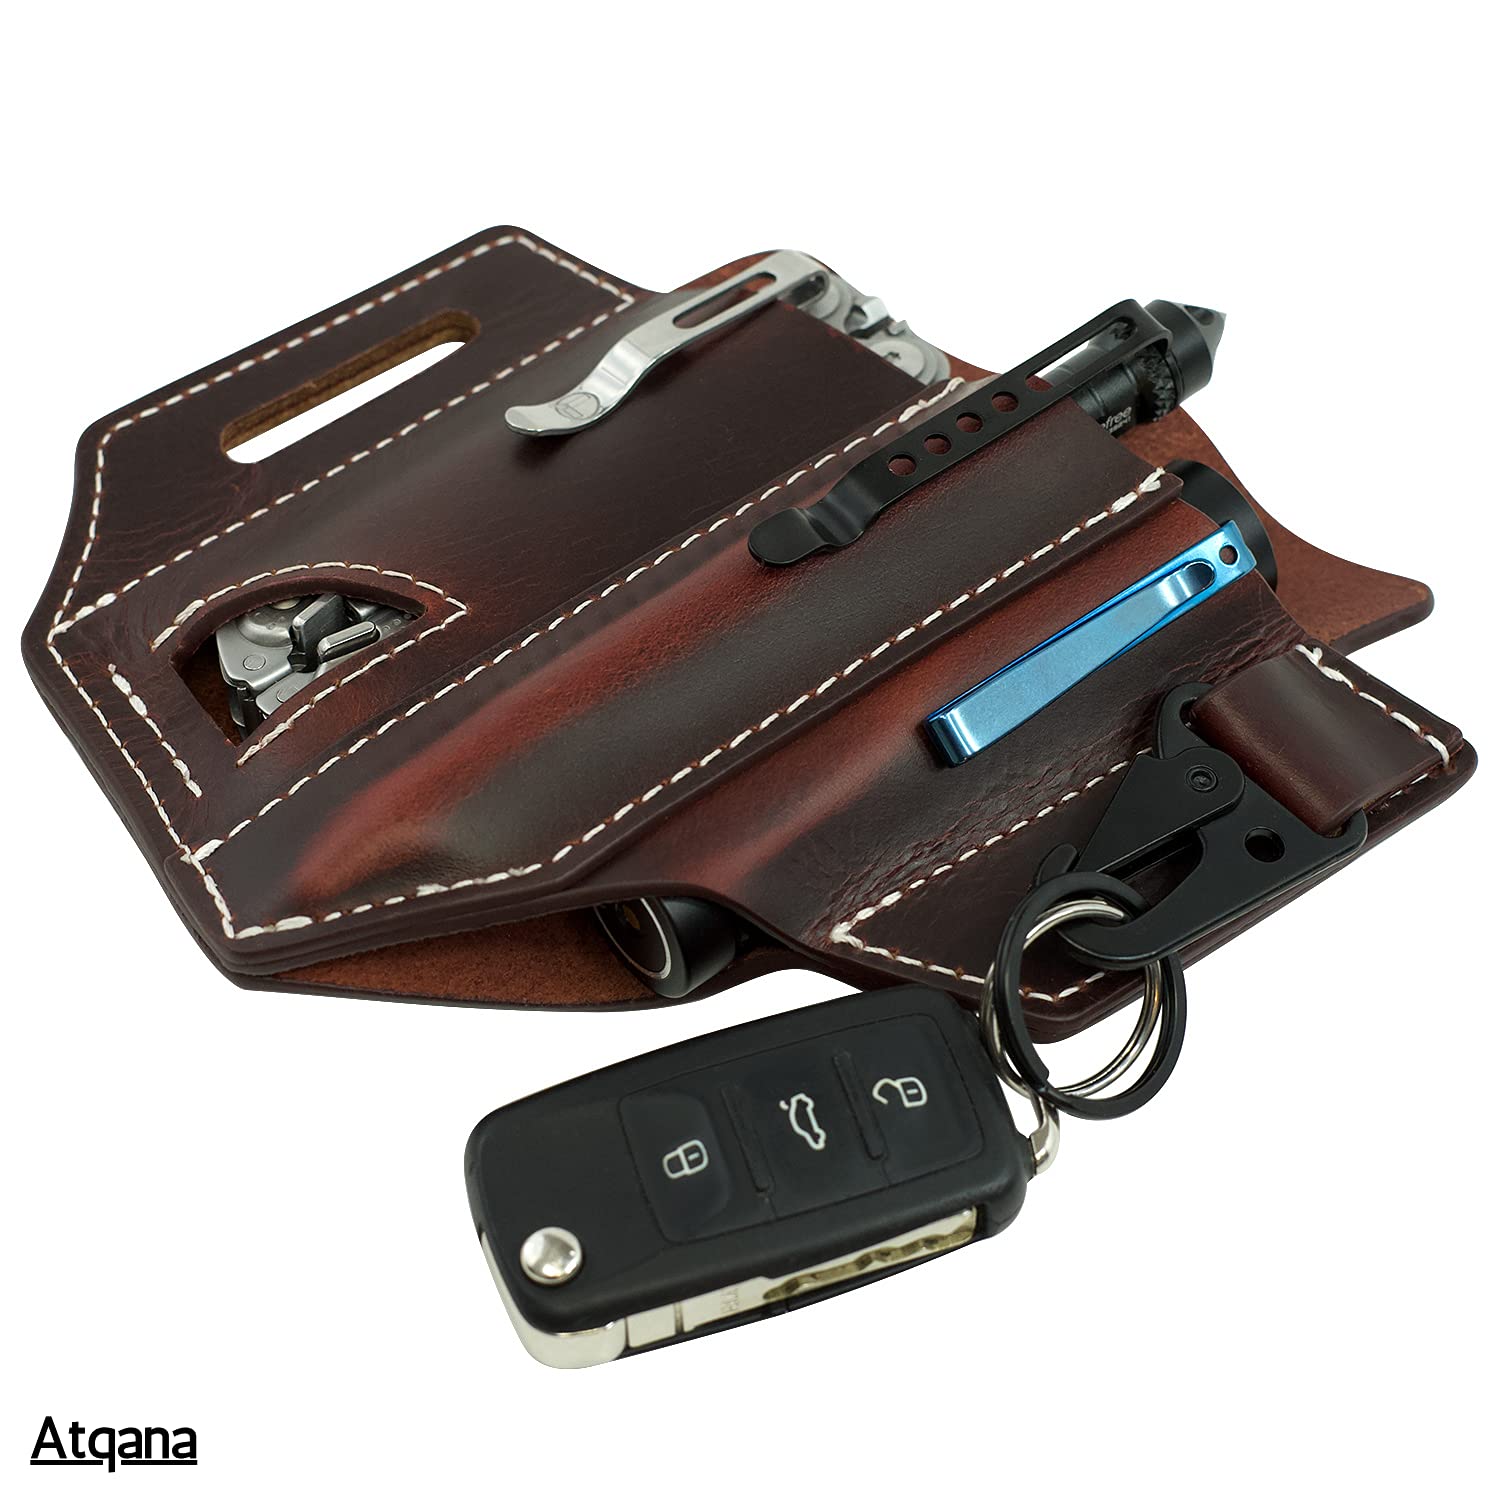 Atqana Multitool Sheath for Belt (Premium Leather) - EDC Pocket Organizer | Leatherman Holster | Handmade Leather Multitool Pouch with Pen Holder, Flashlight Sheath and Key Fob Clip (Extra Dark Brown)